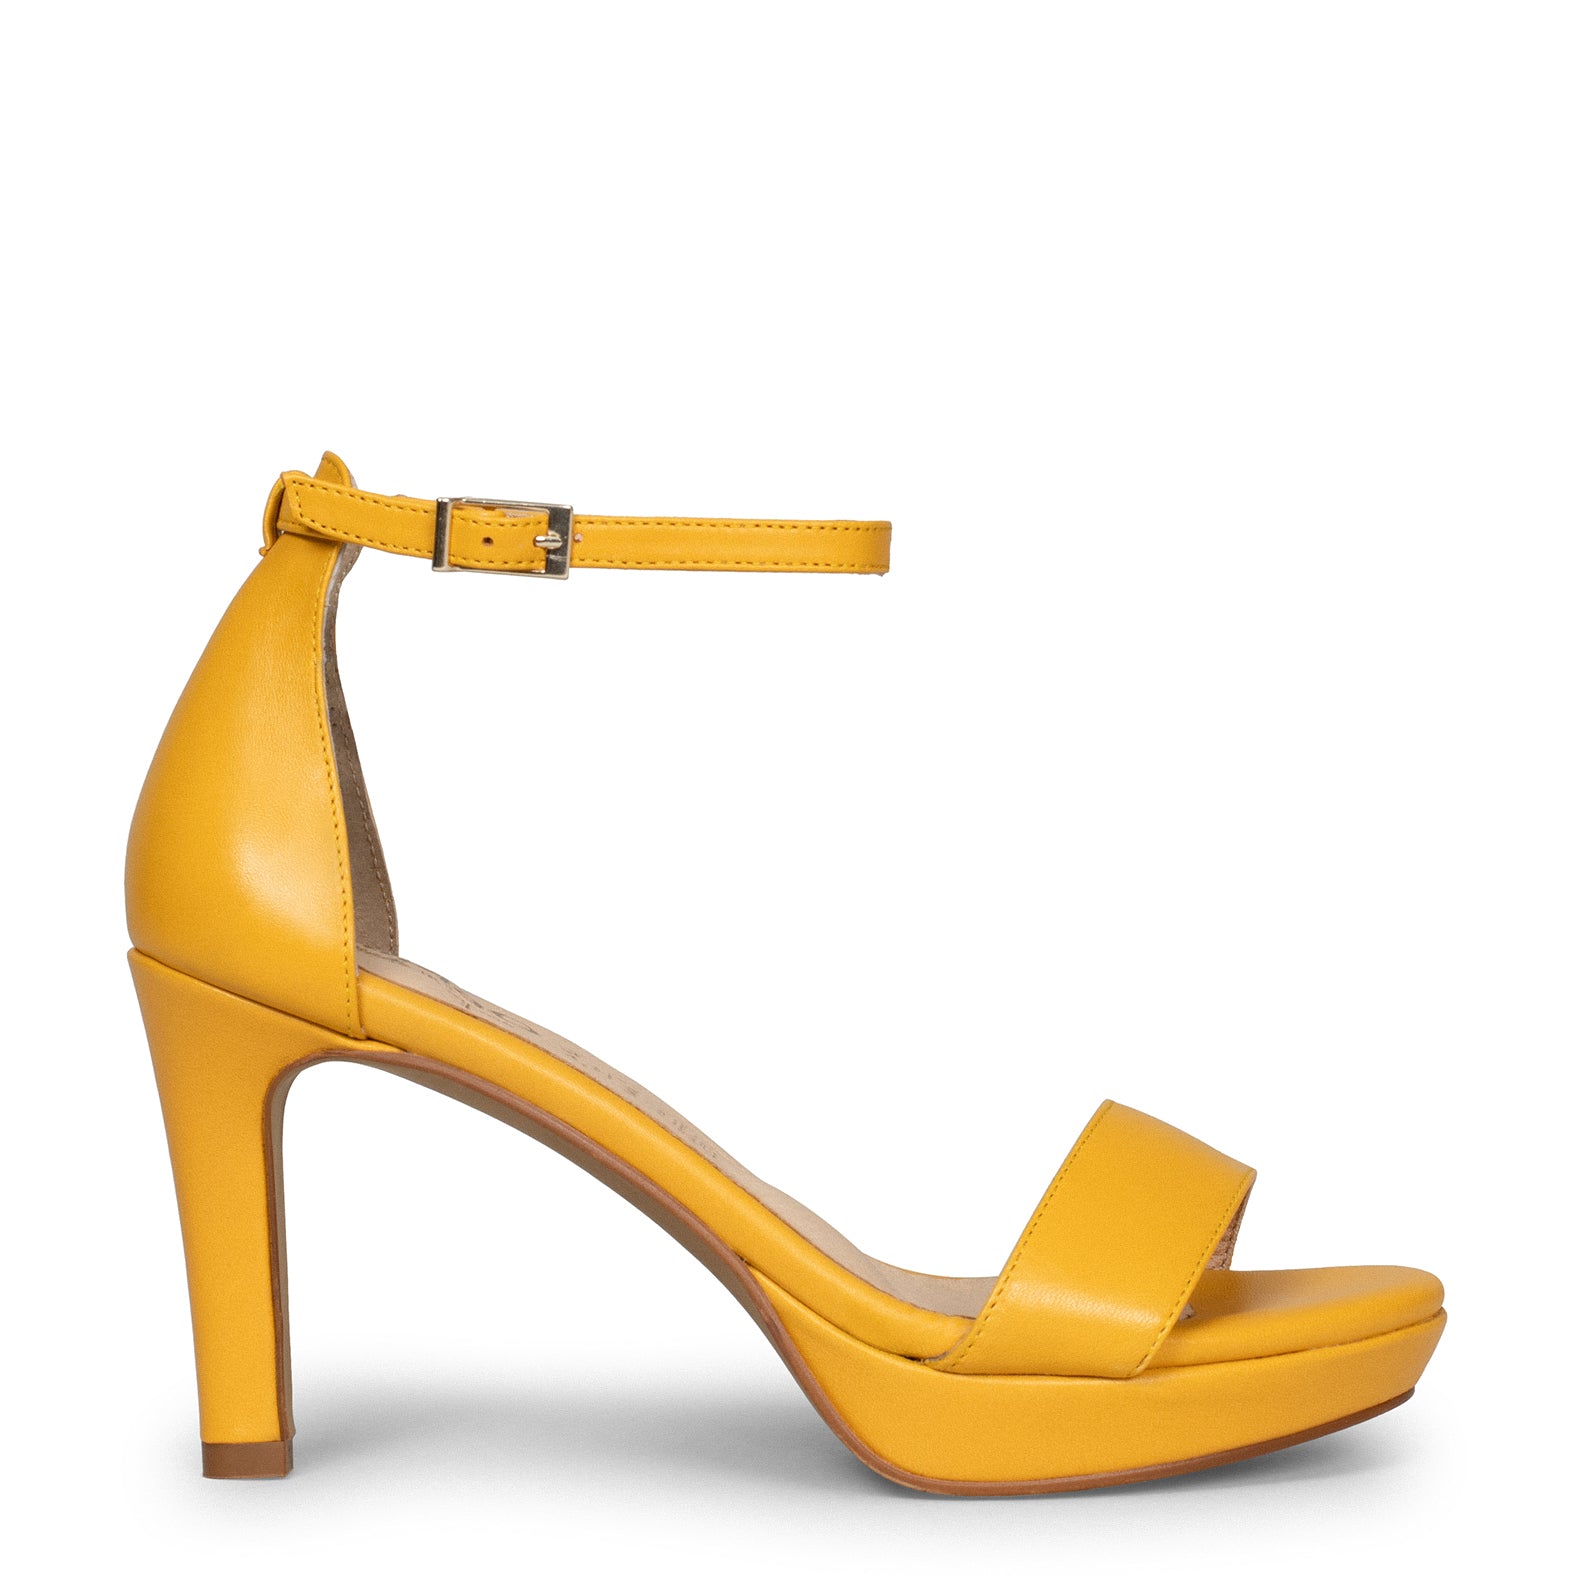 PARTY – YELLOW high-heeled platform sandals